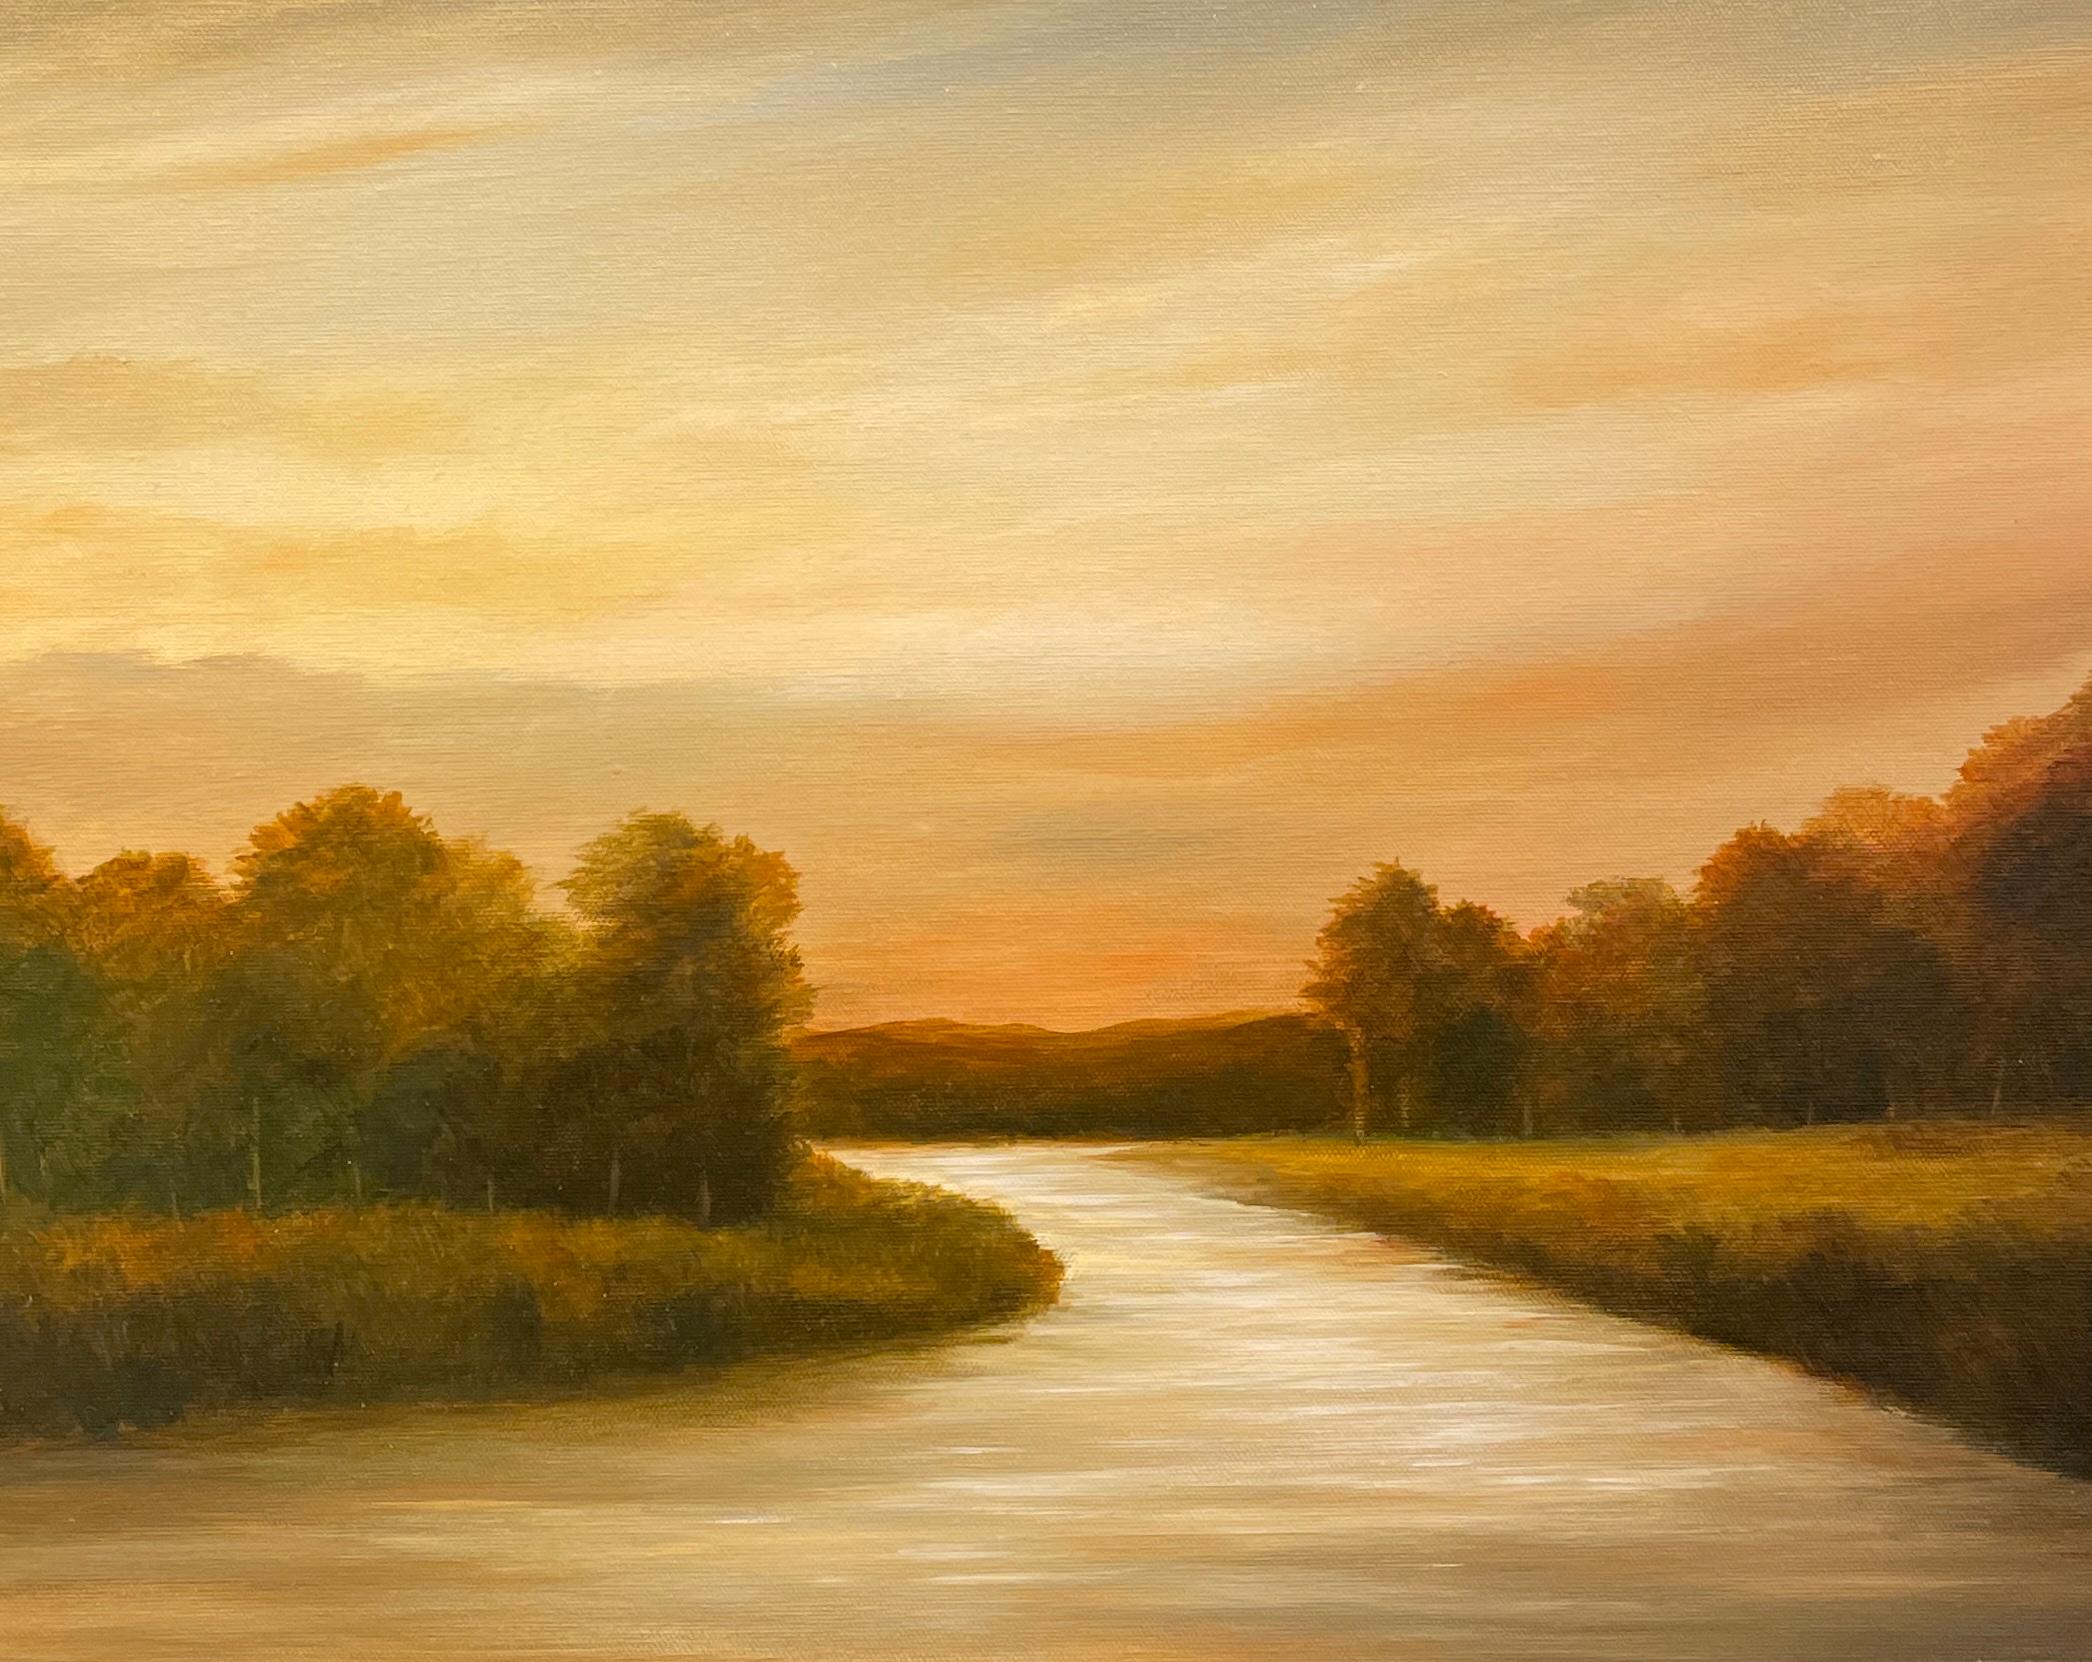 Ahzad Bogosian Landscape Painting - Creek Bend at Dusk - Original Oil Painting with a Golden Landscape, River Scene